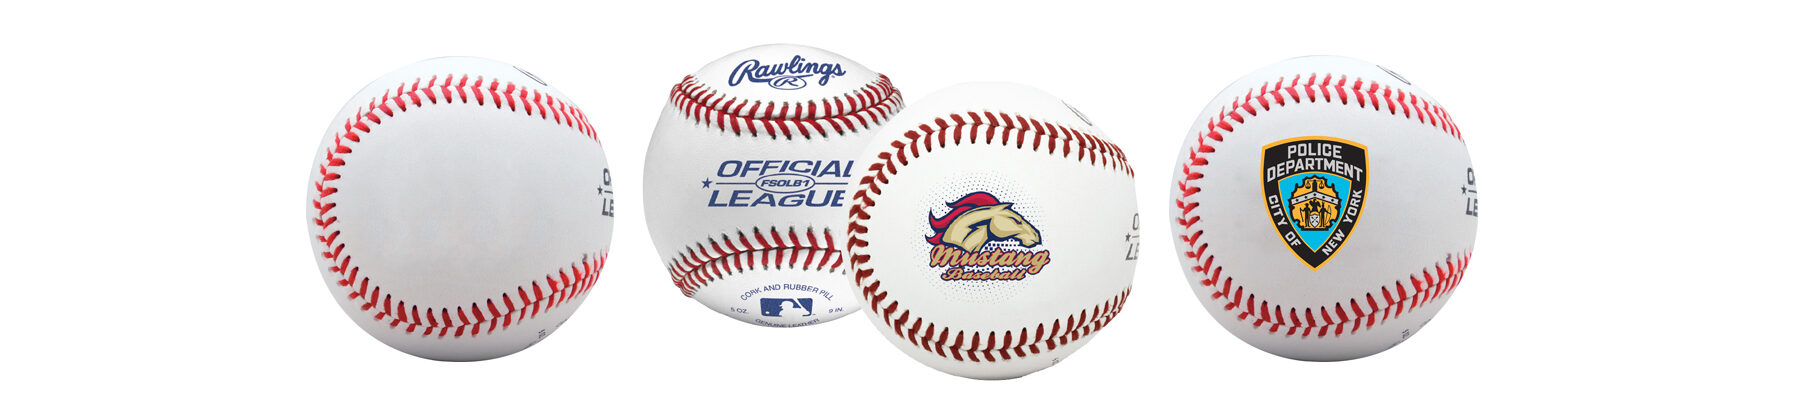 Rawlings Official League FSOLB1 Leather Baseball